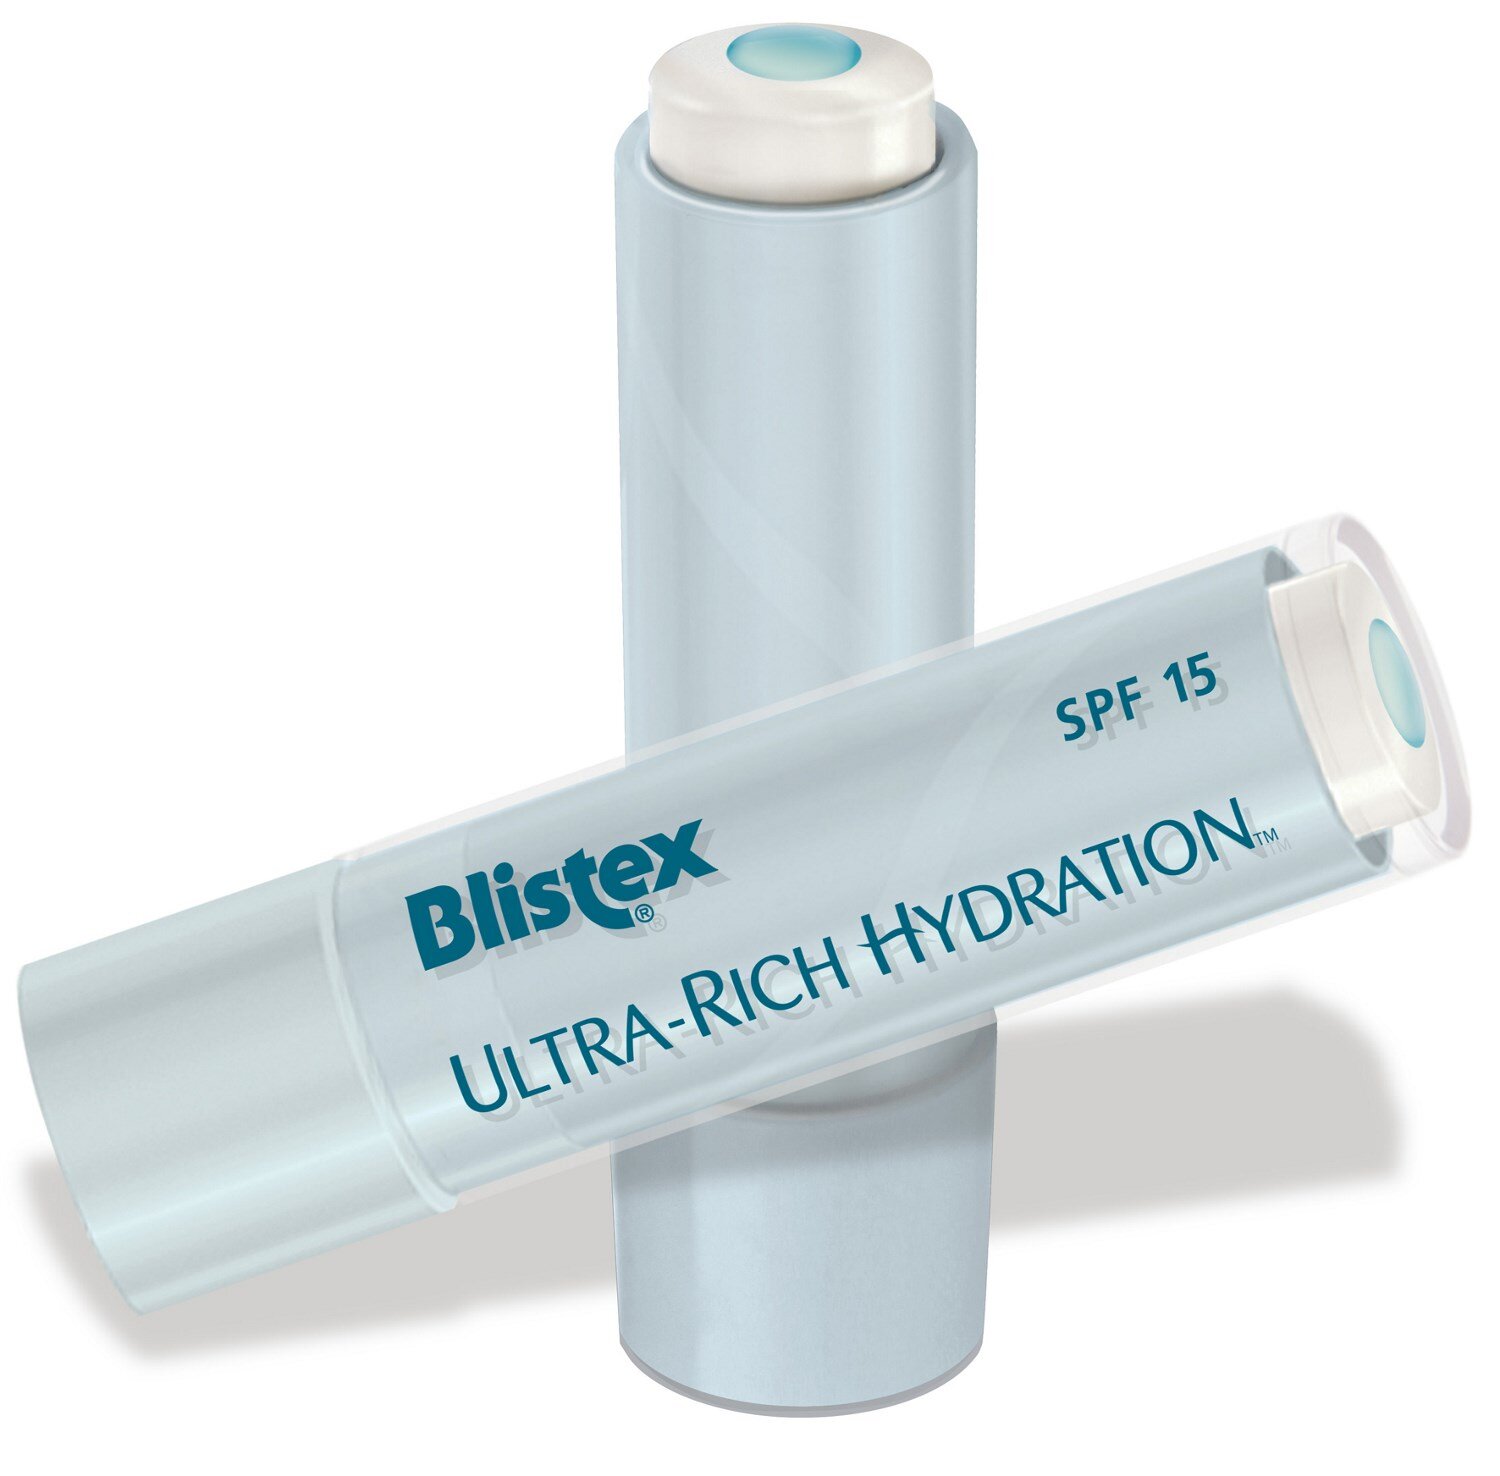 Blistex-Ulta-Rich-Hydration-pack-shot.jpg